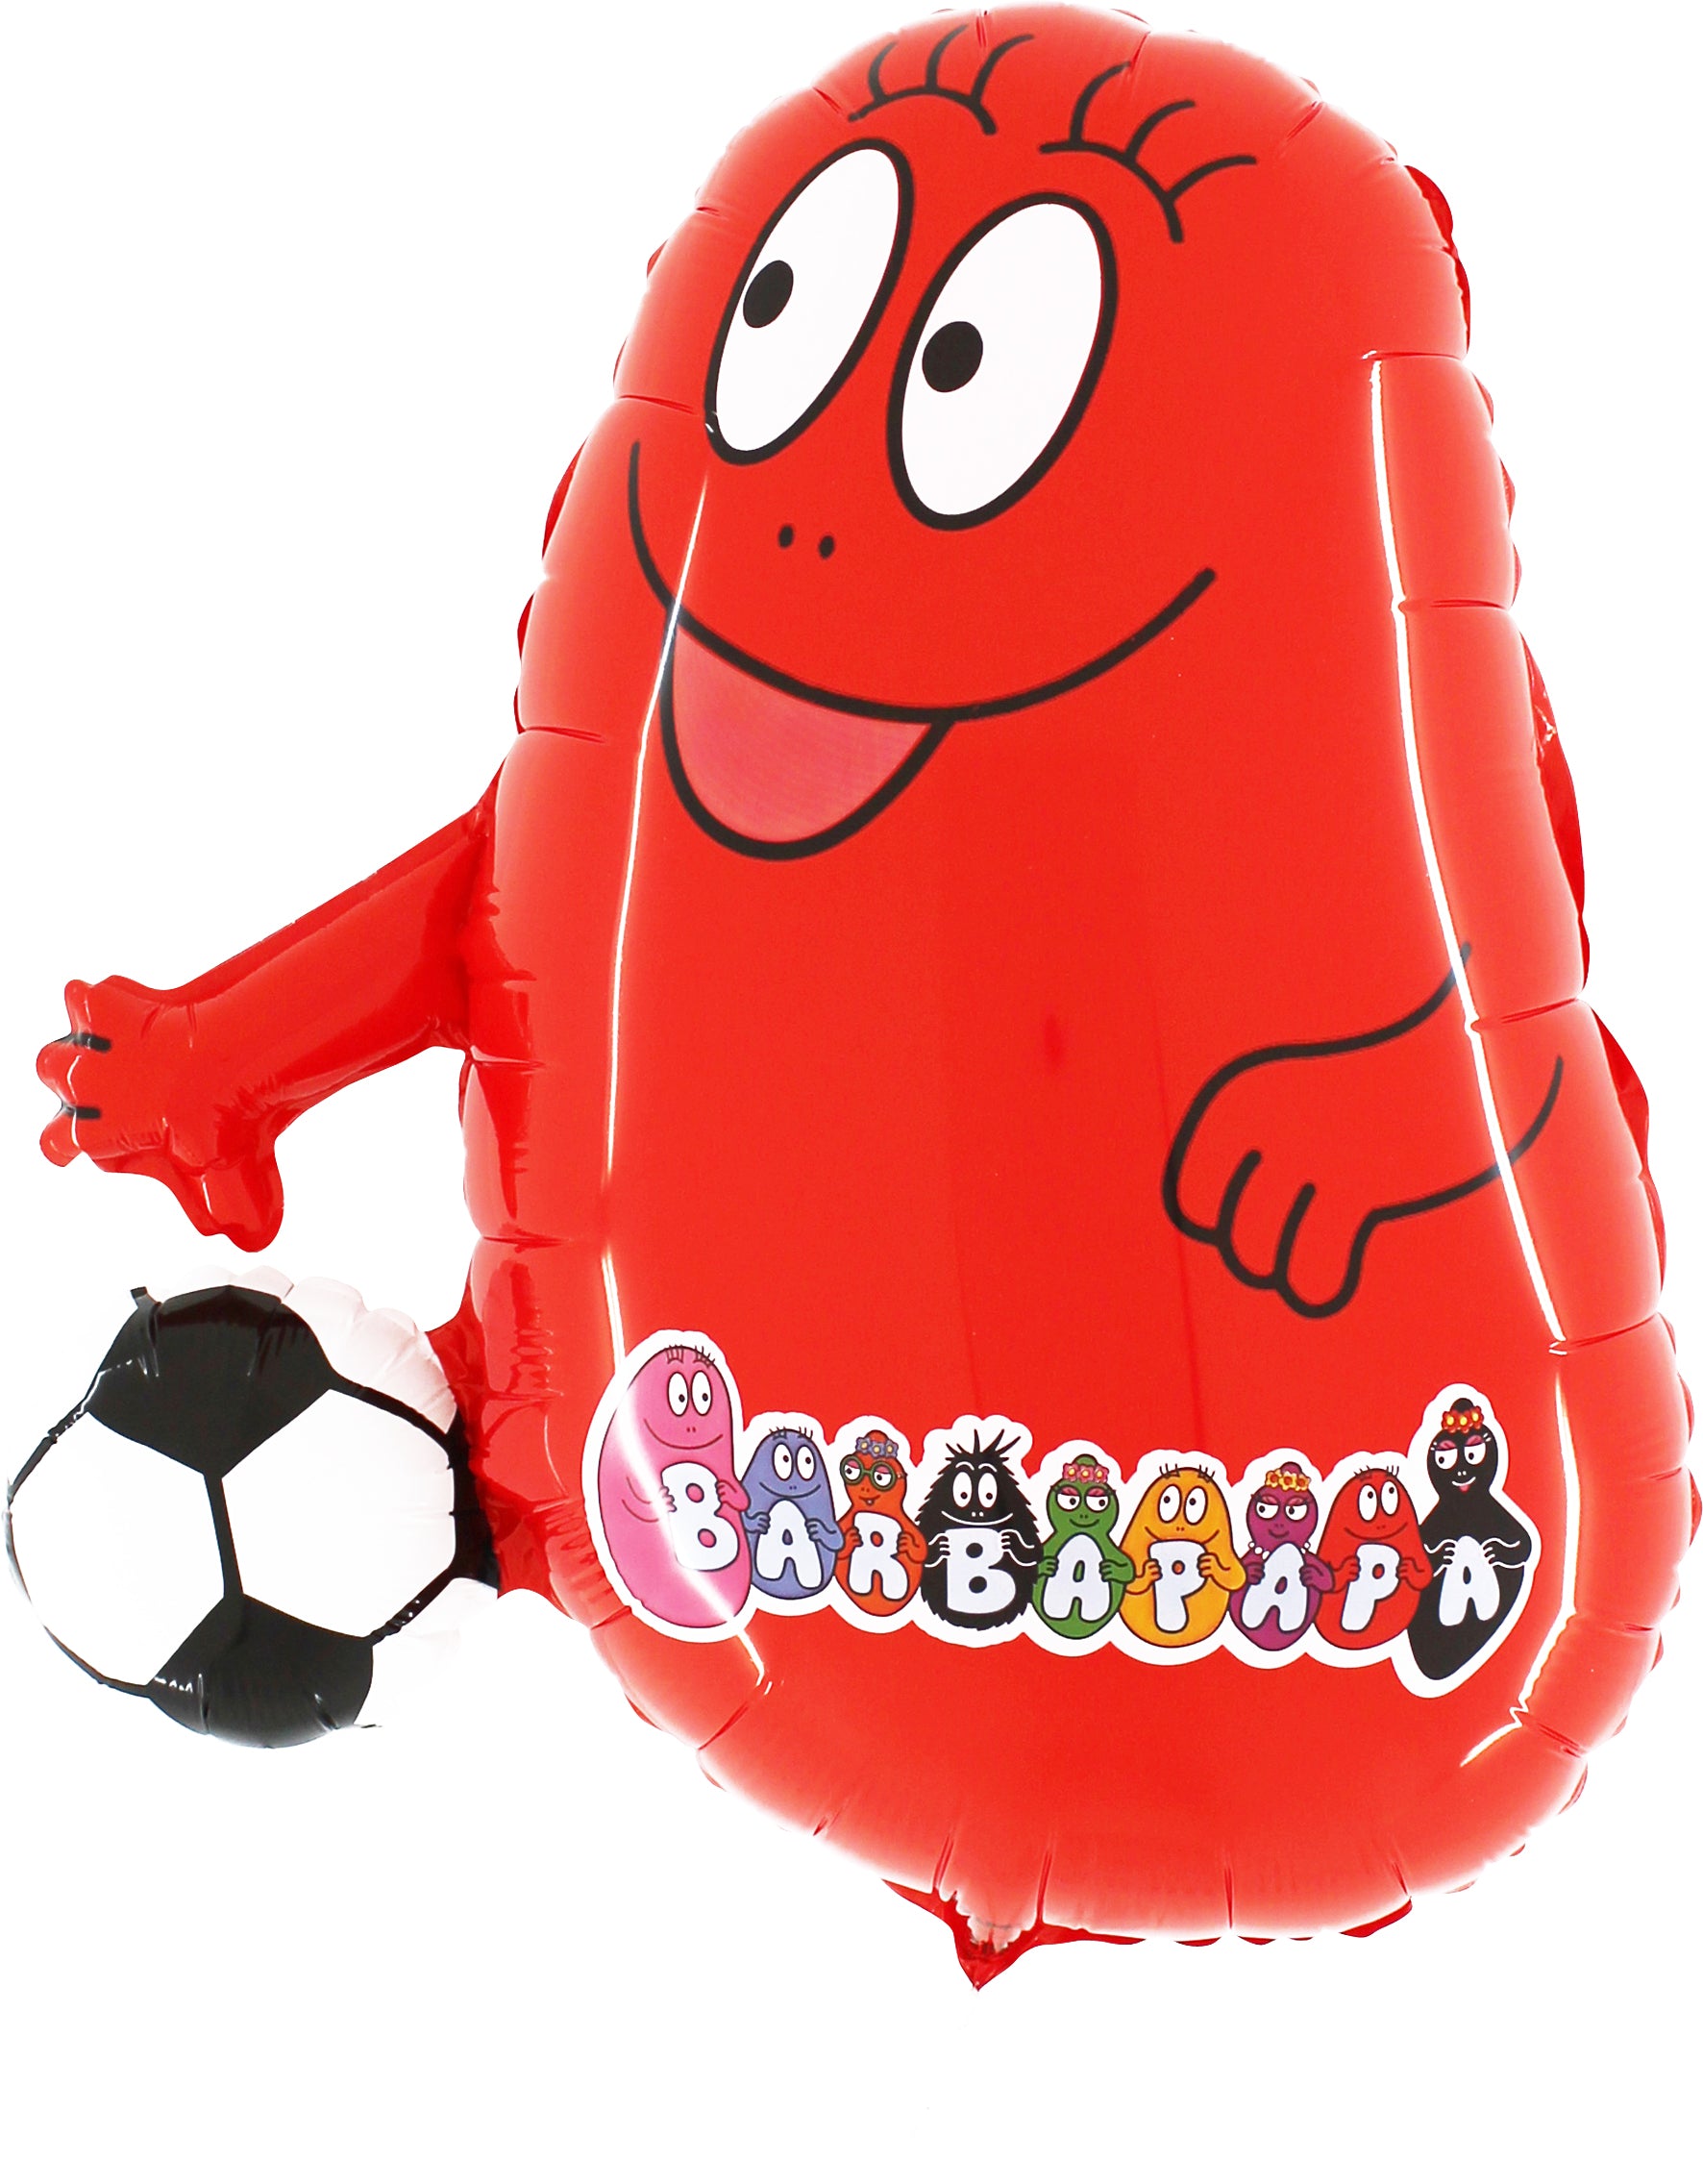 red barbapapa shaped balloon with soccer ball